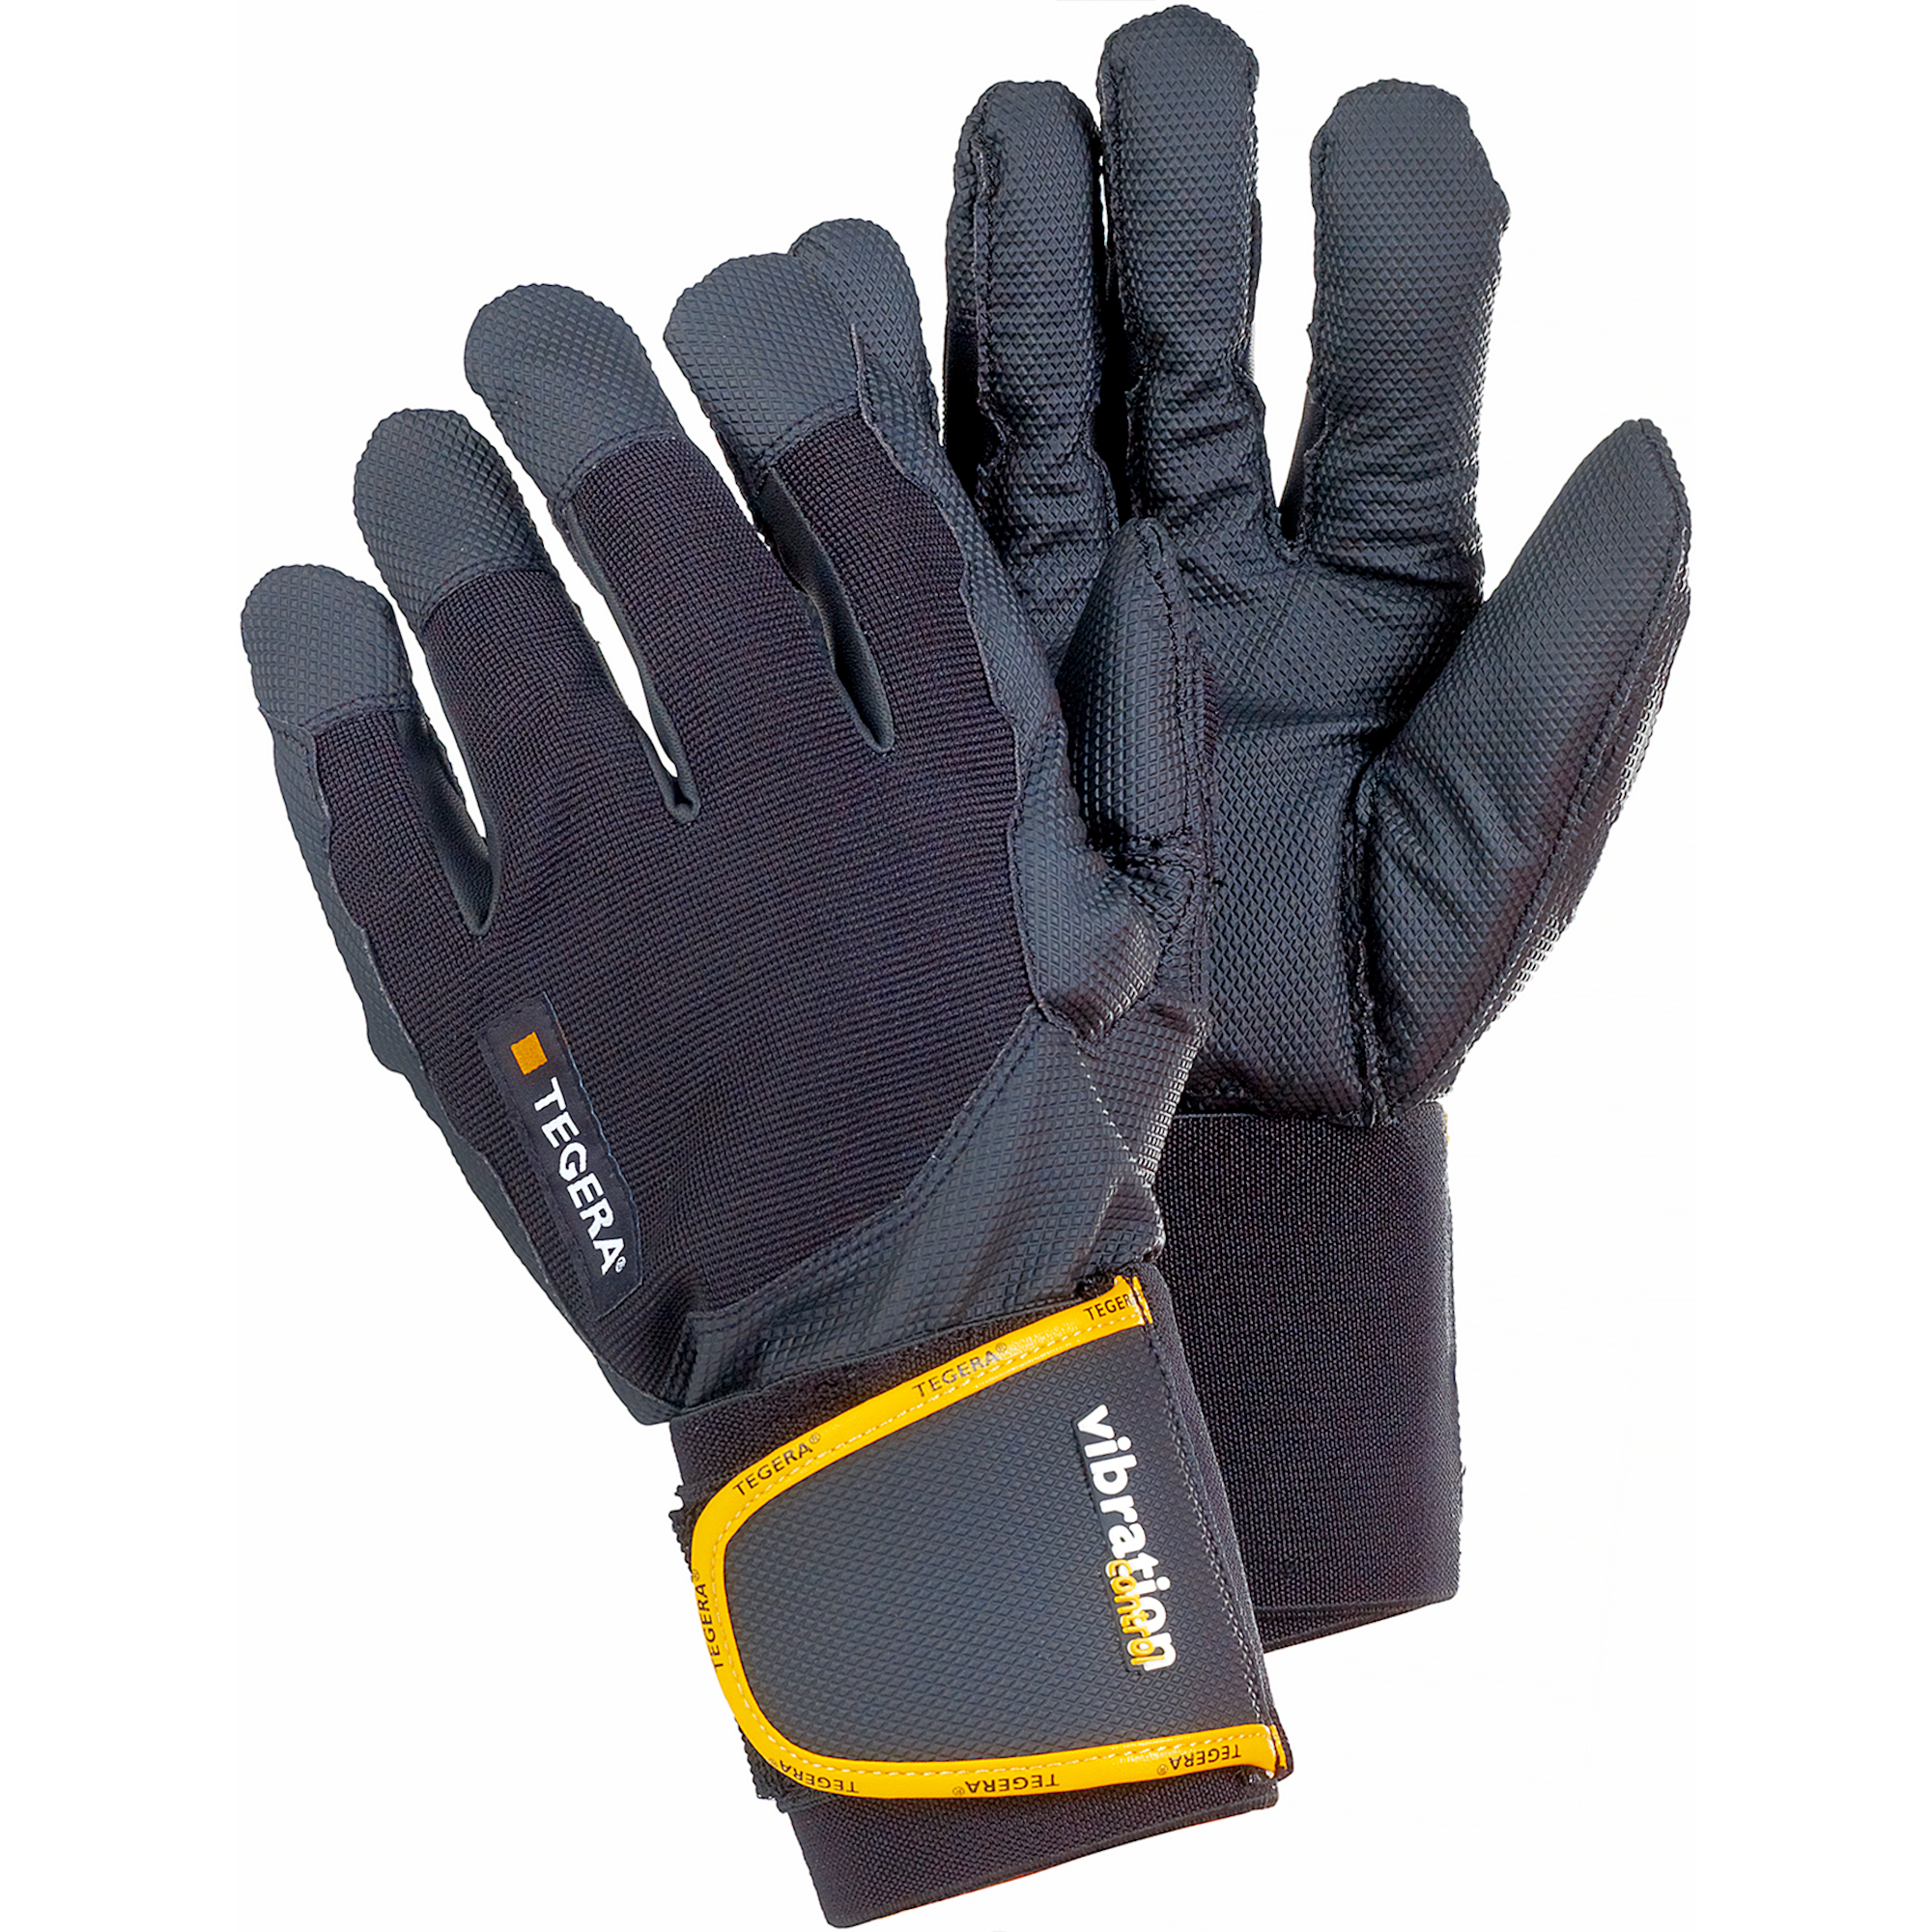 Tegera 9183 Anti-Vibration Work Glove